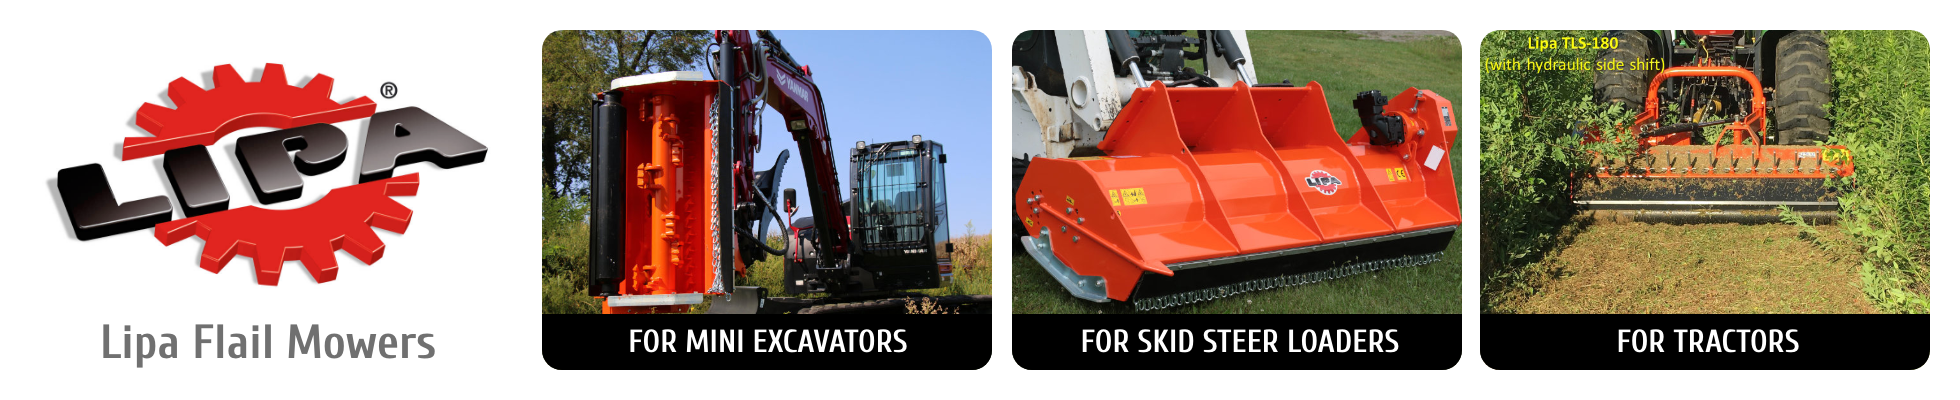 Lipa Flail Mowers for Mini Excavators, Skid Steer Loaders, and Tractors.